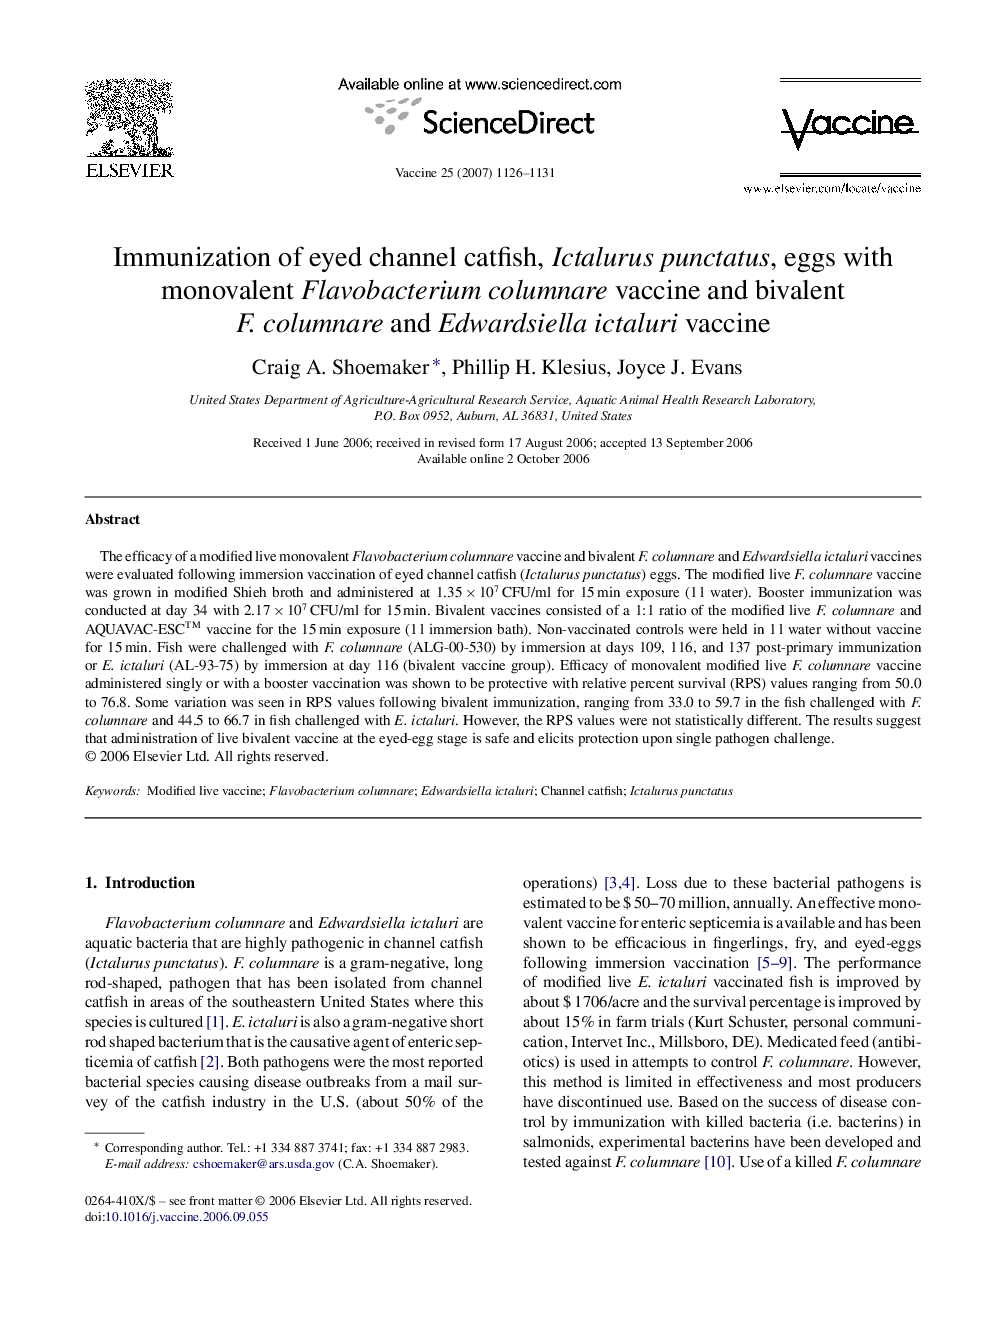 Immunization of eyed channel catfish, Ictalurus punctatus, eggs with monovalent Flavobacterium columnare vaccine and bivalent F. columnare and Edwardsiella ictaluri vaccine